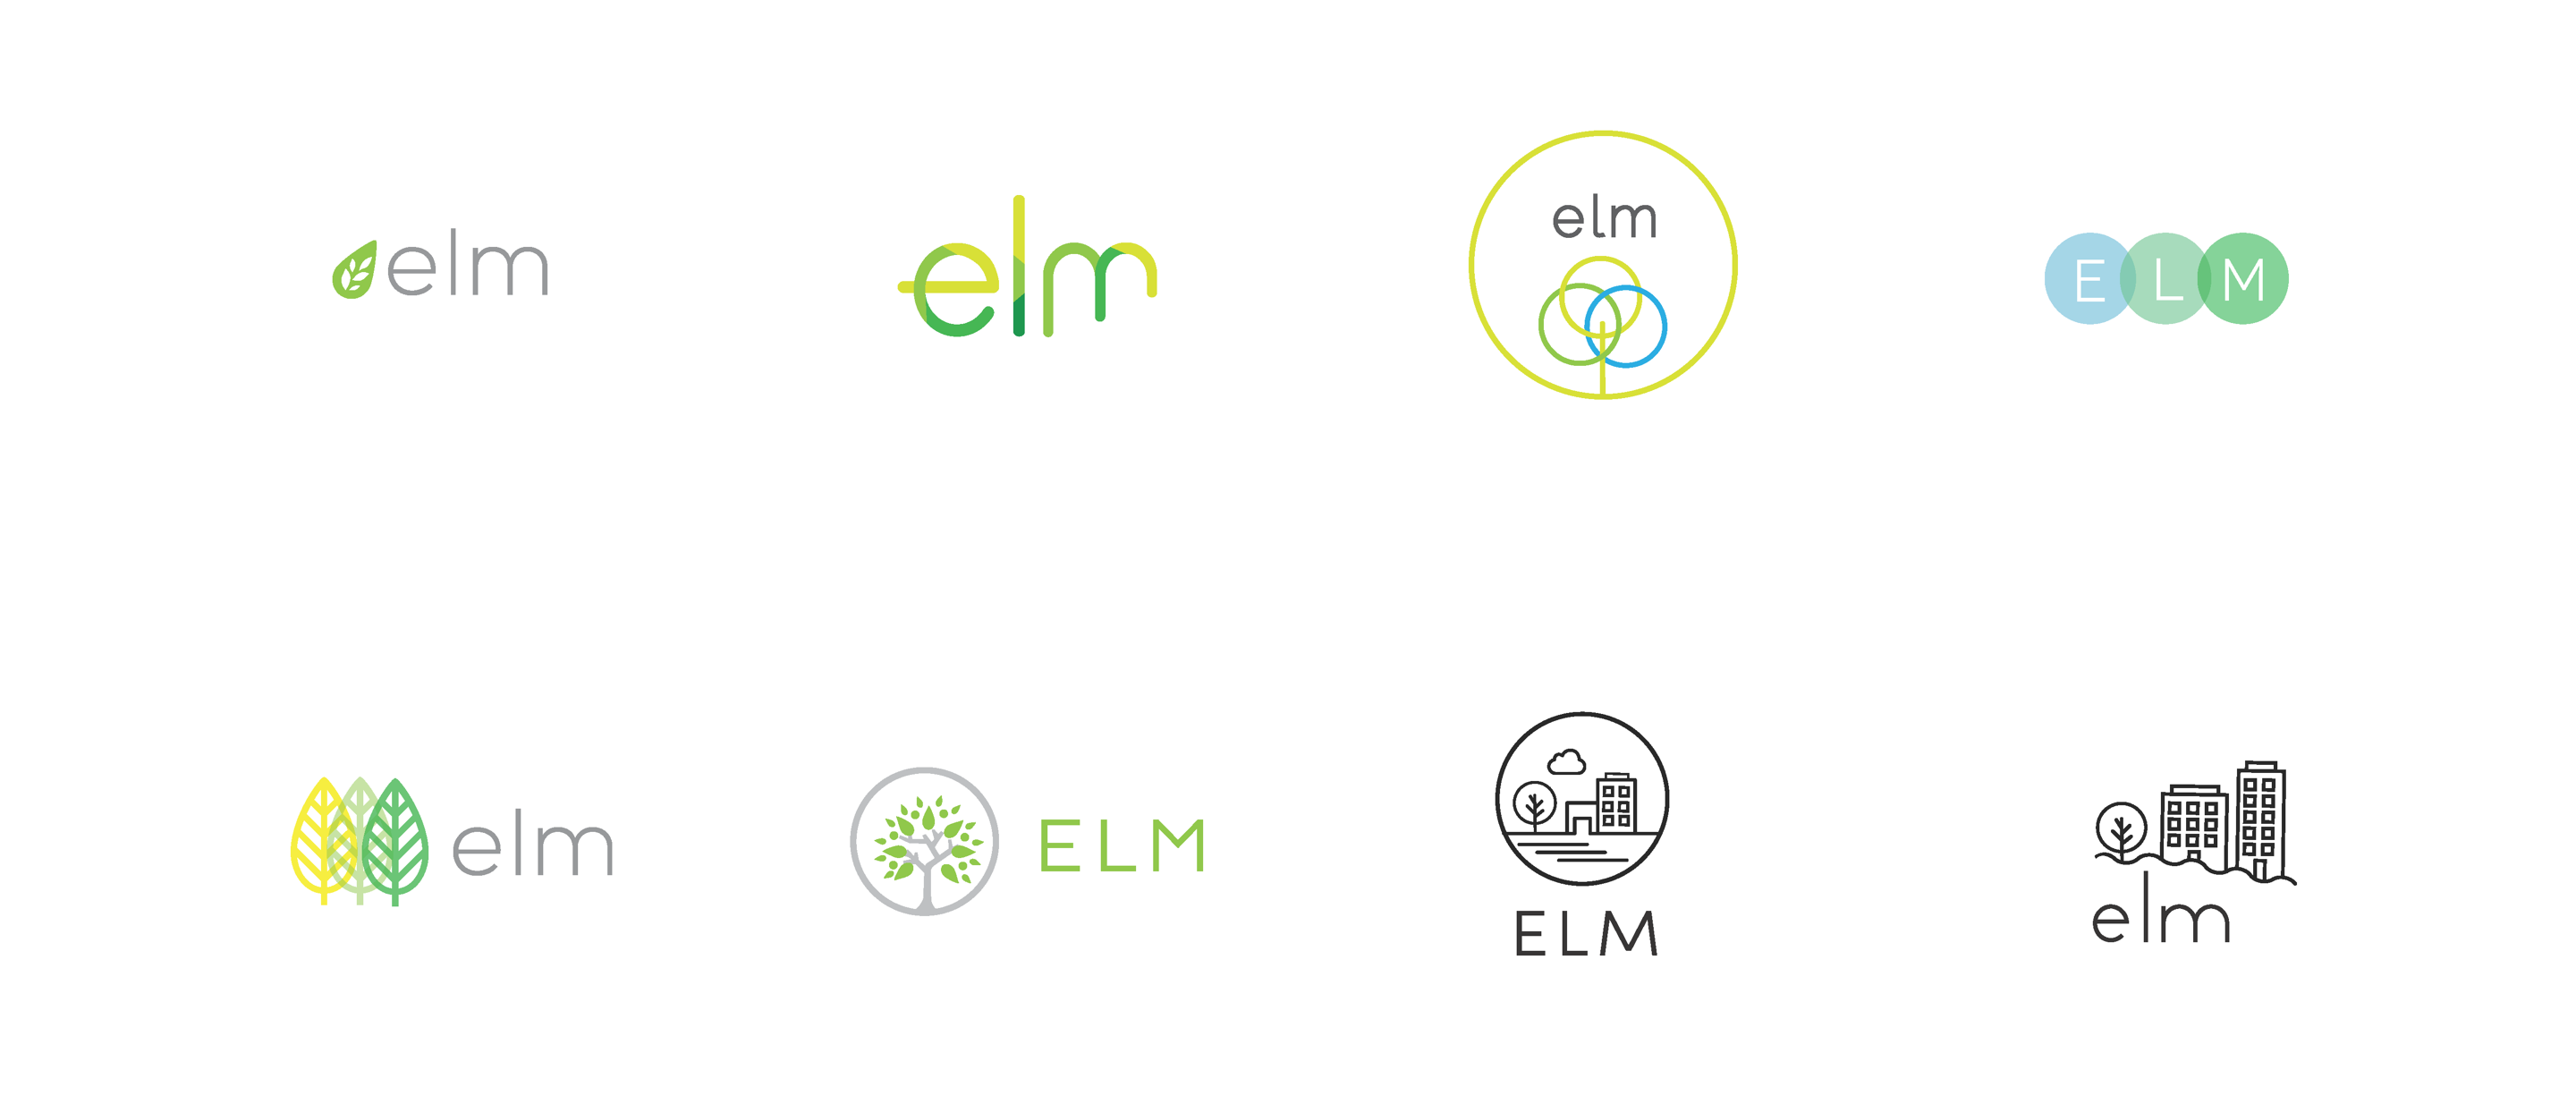 Elm logos